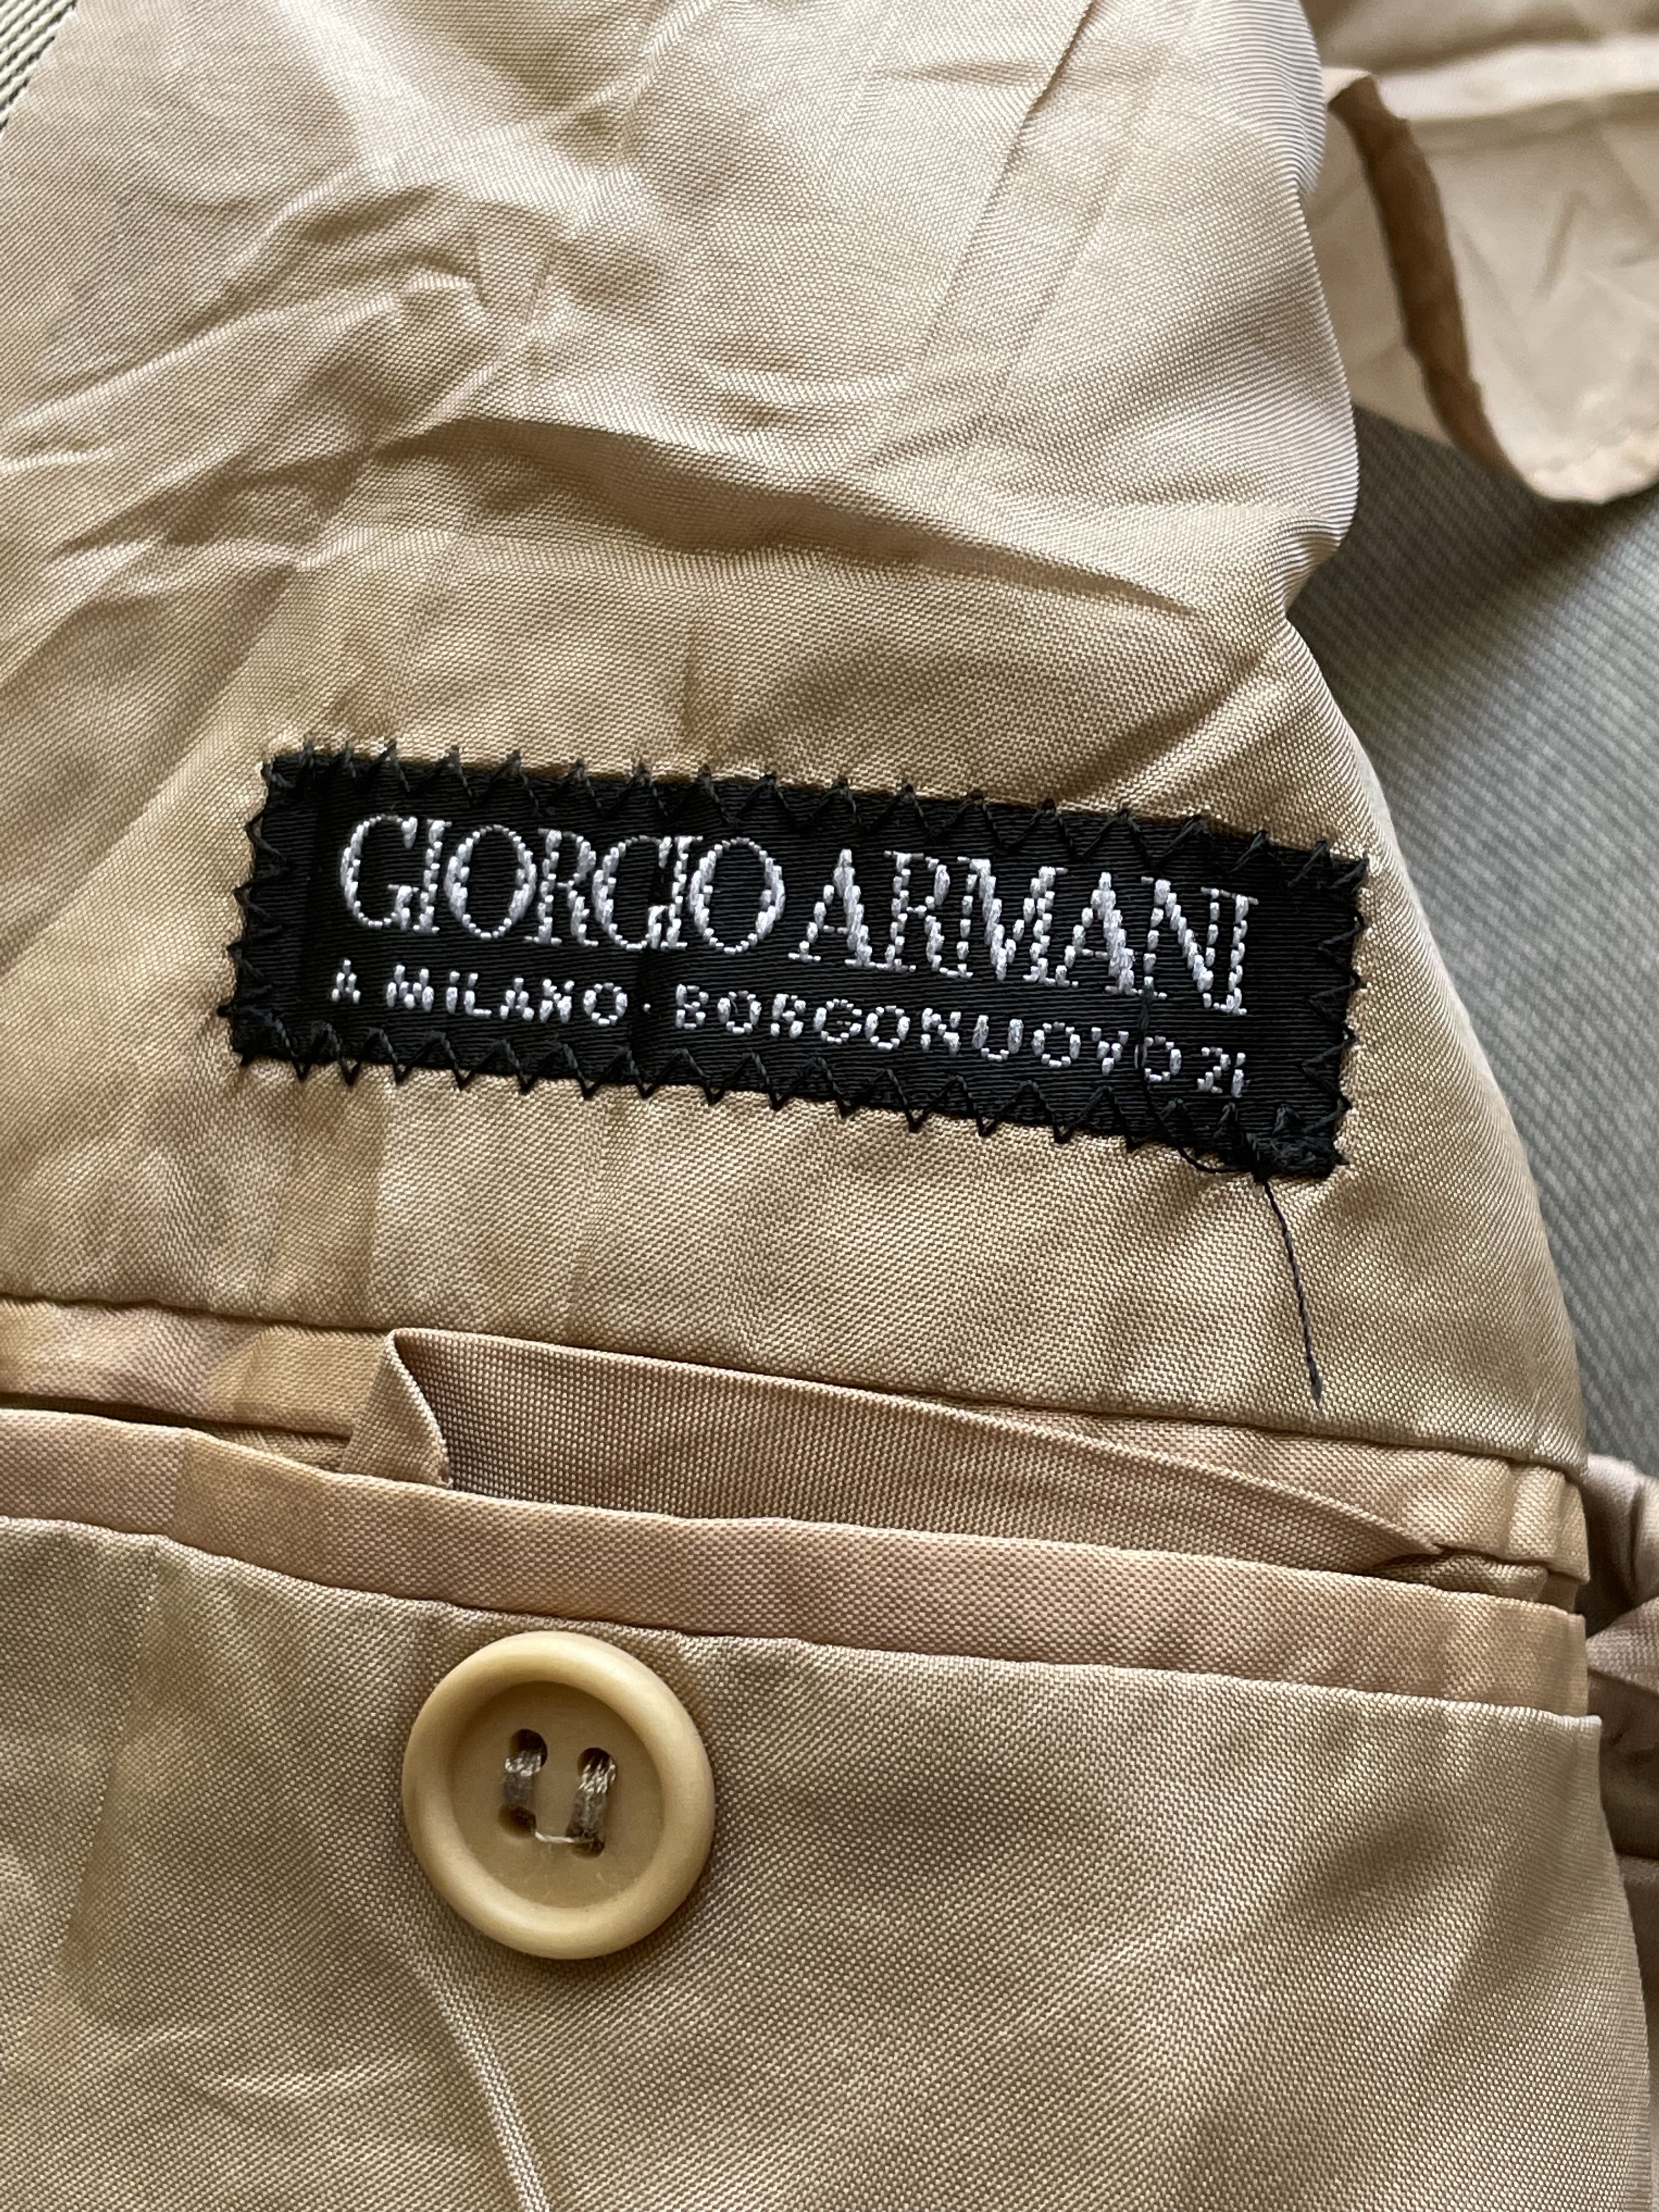 A guide to Giorgio Armani men's clothing brands and diffusion